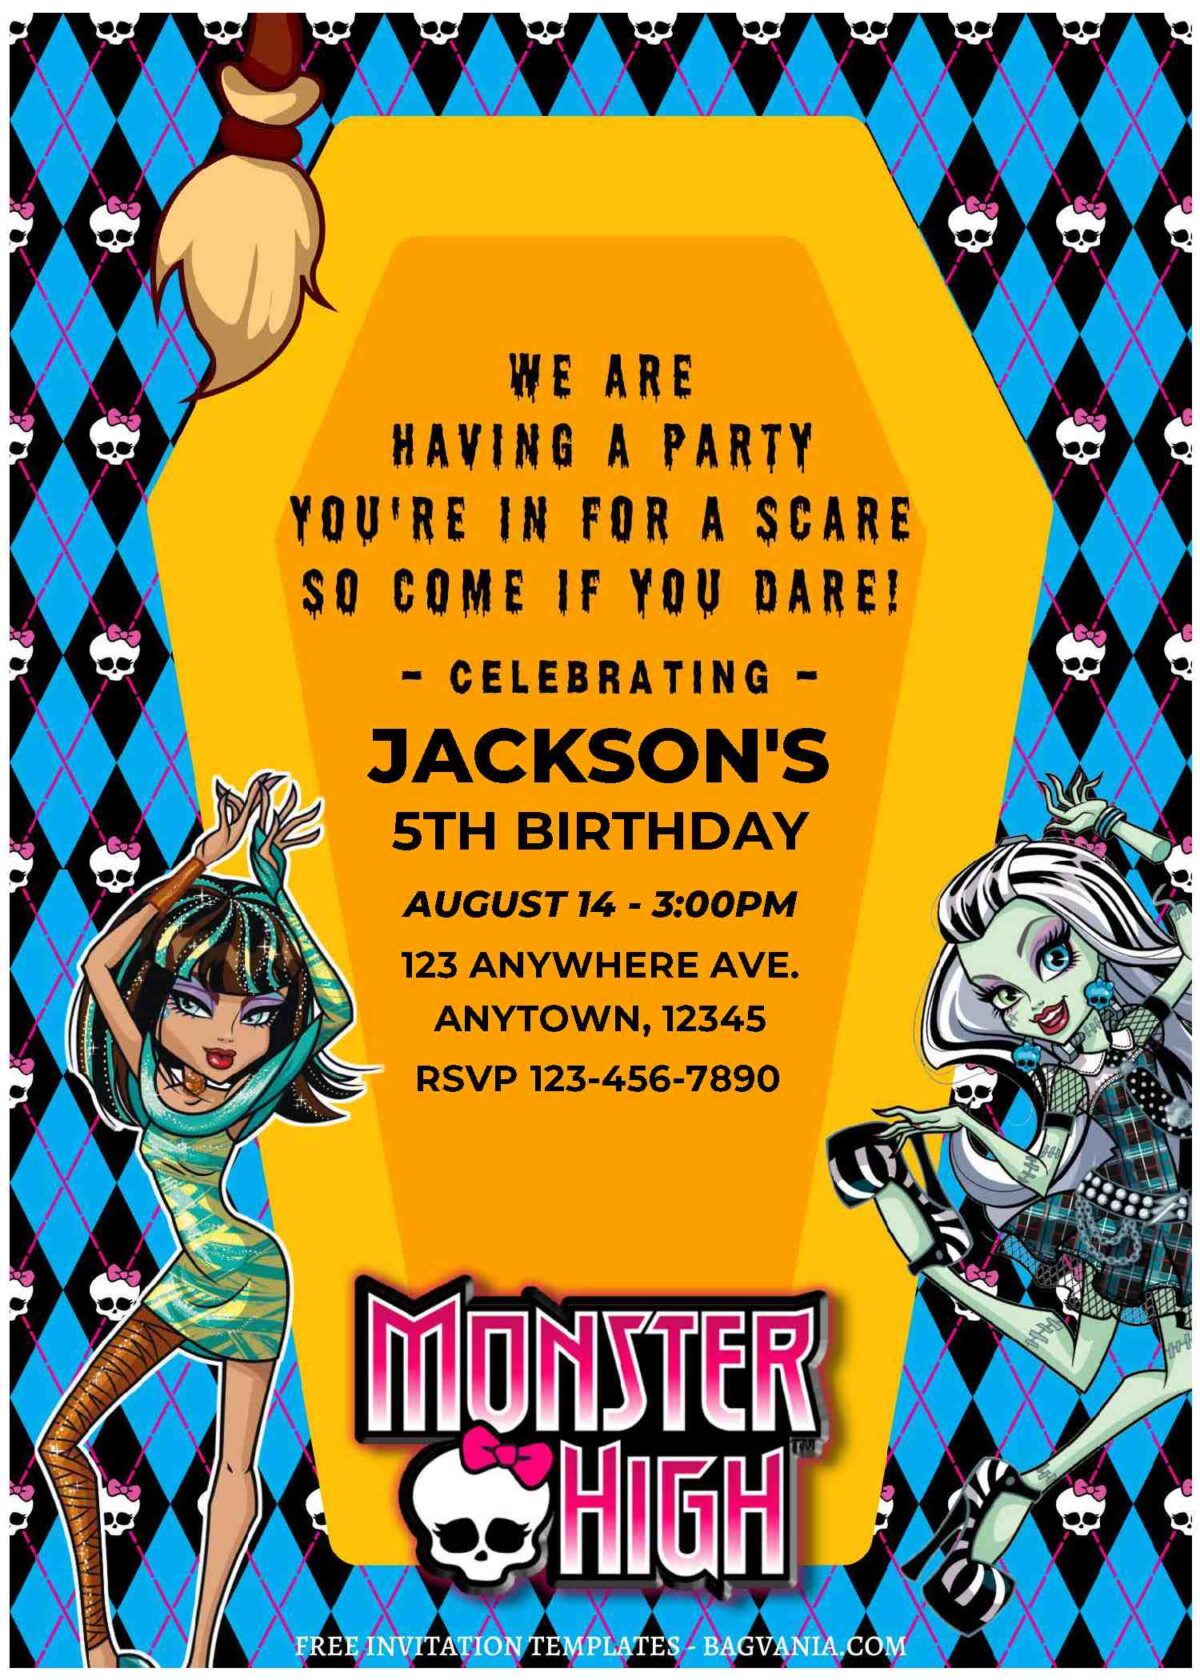 (Free Editable PDF) Lovely Monster High Birthday Invitation Templates A